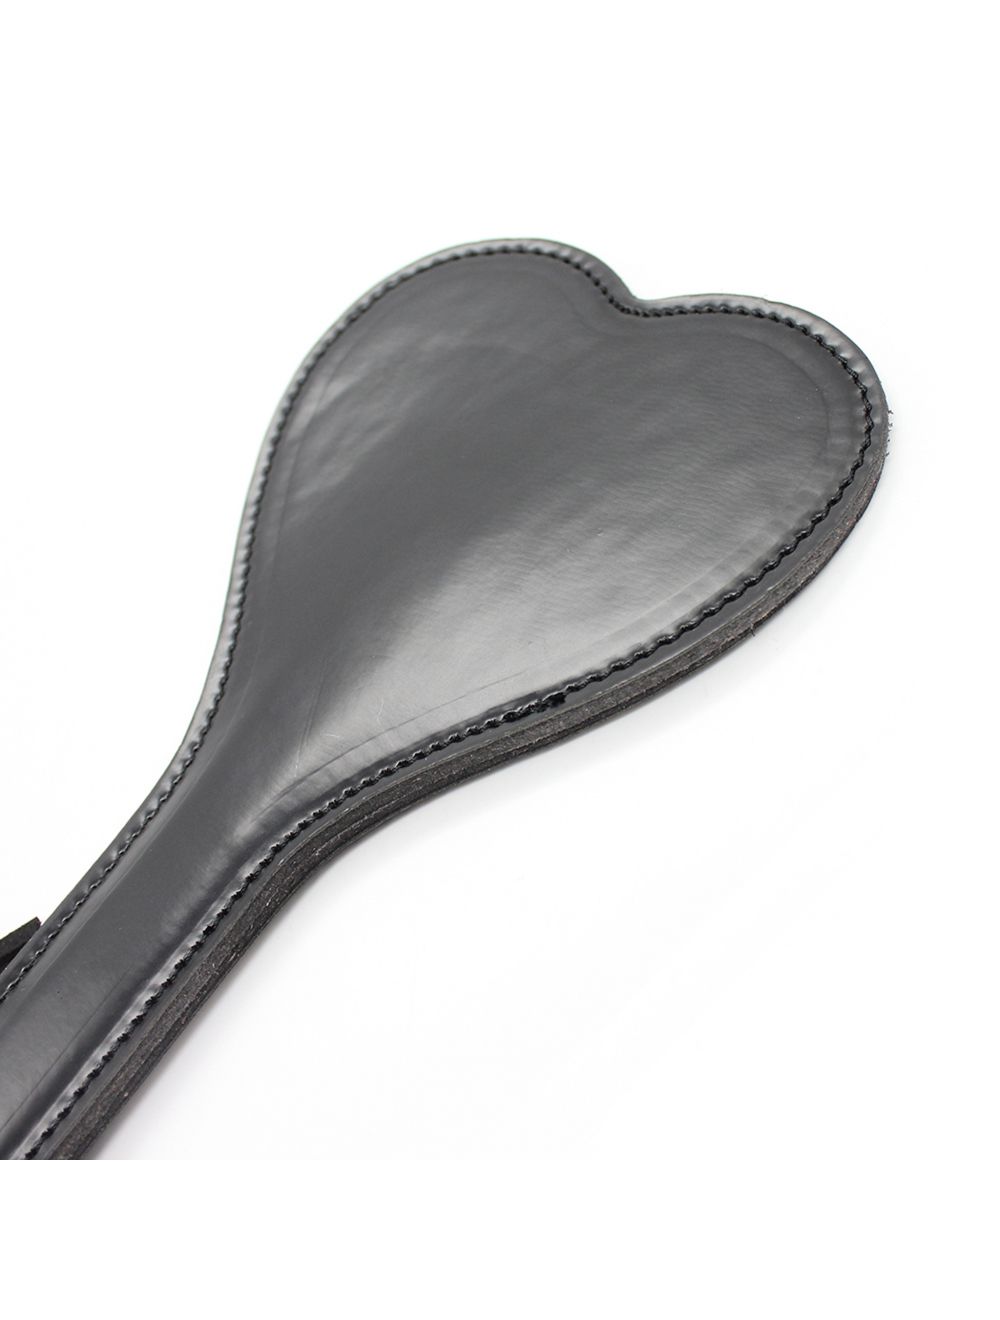 Heart Shaped Paddle